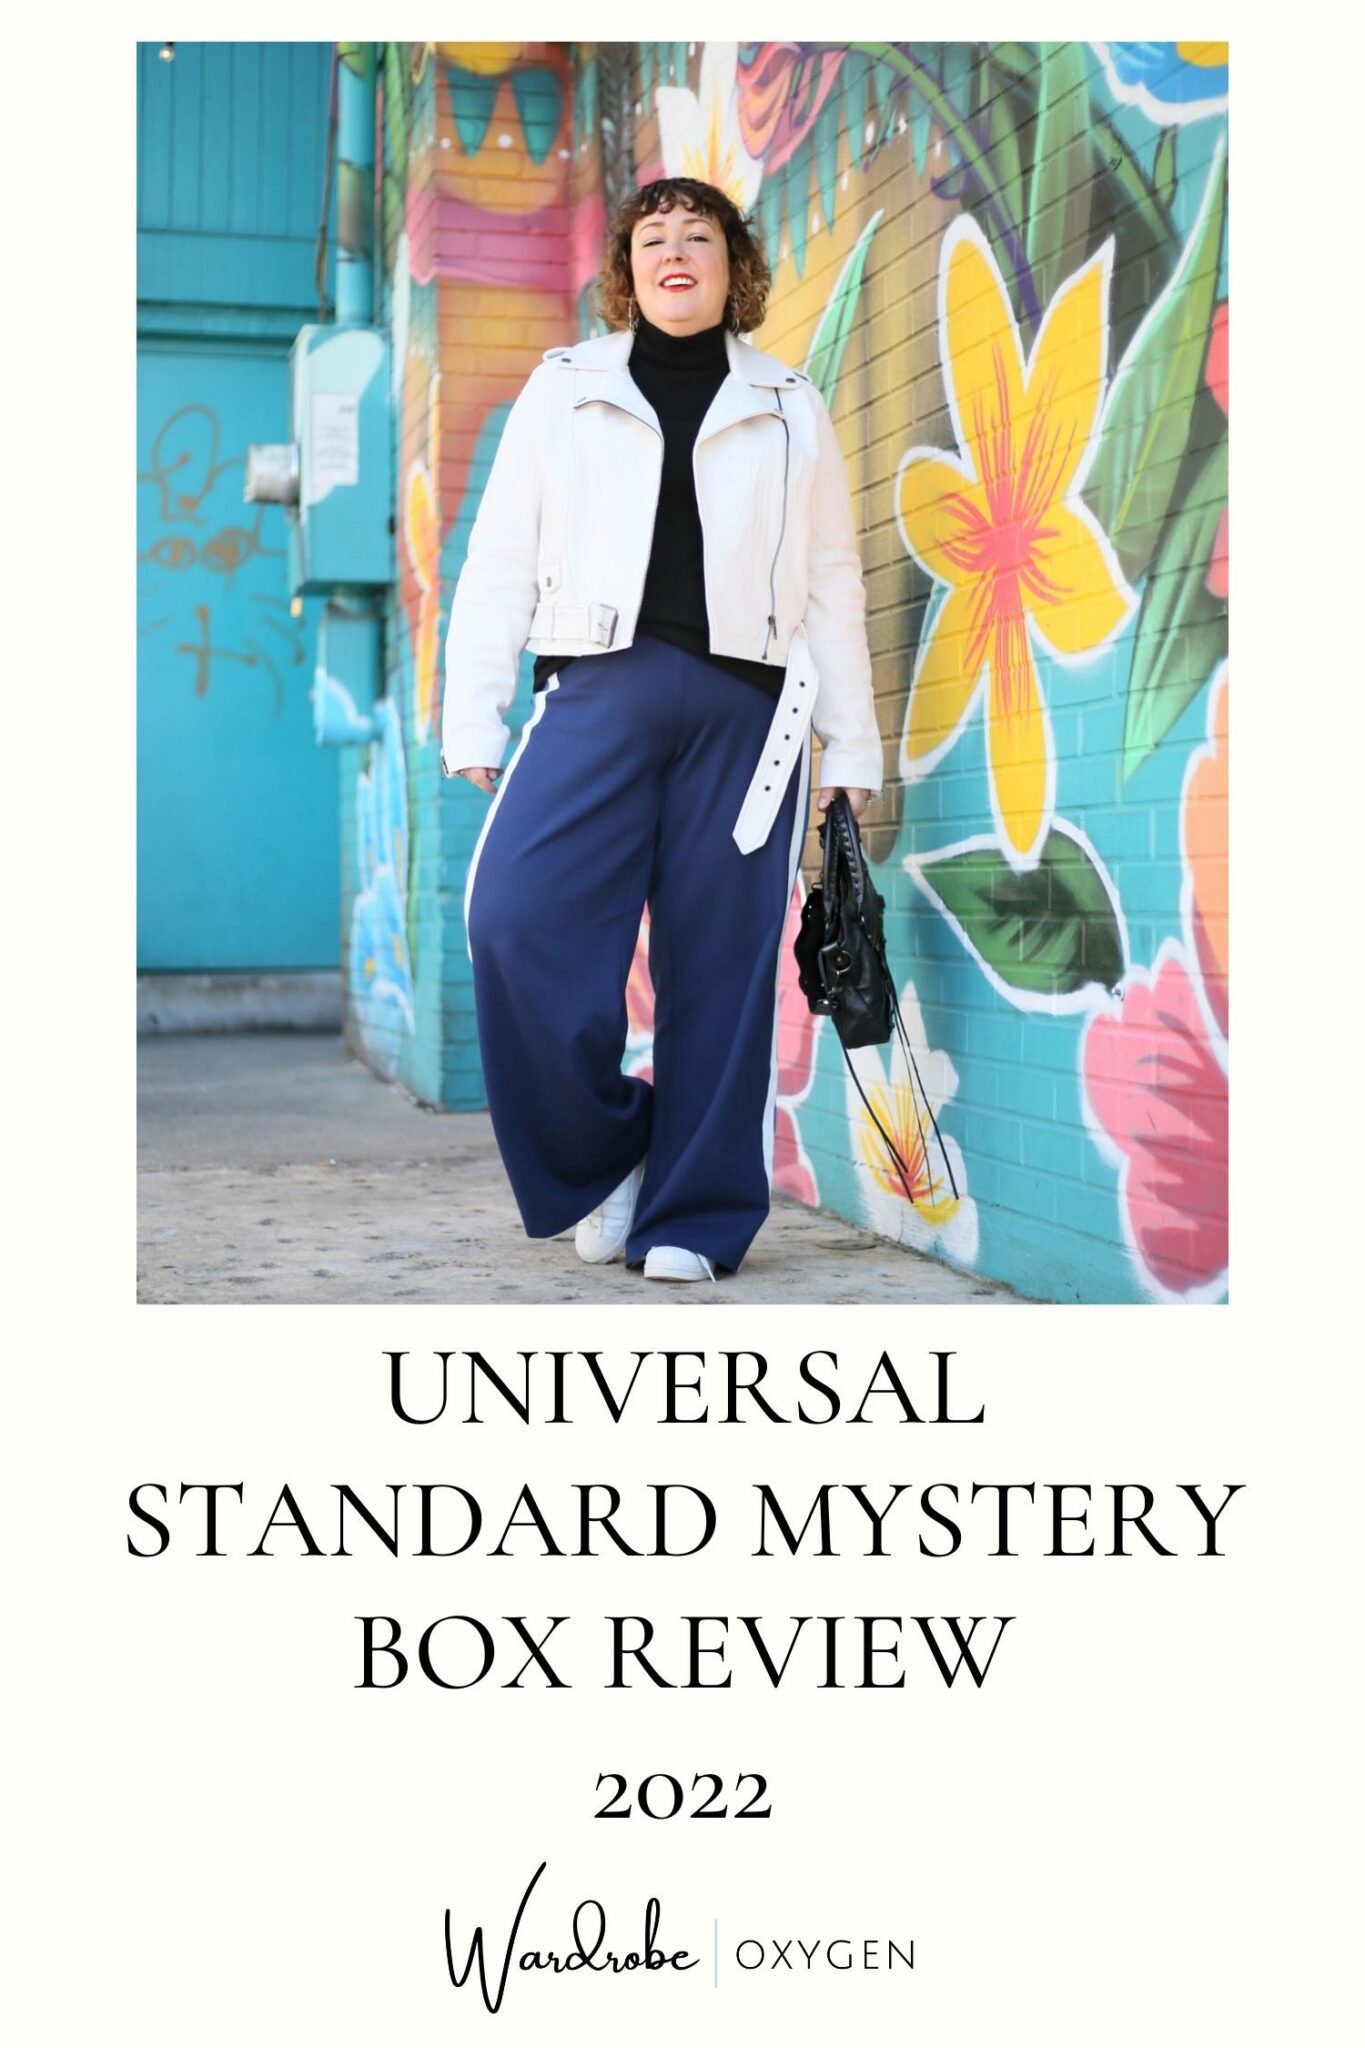 The Universal Standard Mystery Box is Back! Wardrobe Oxygen